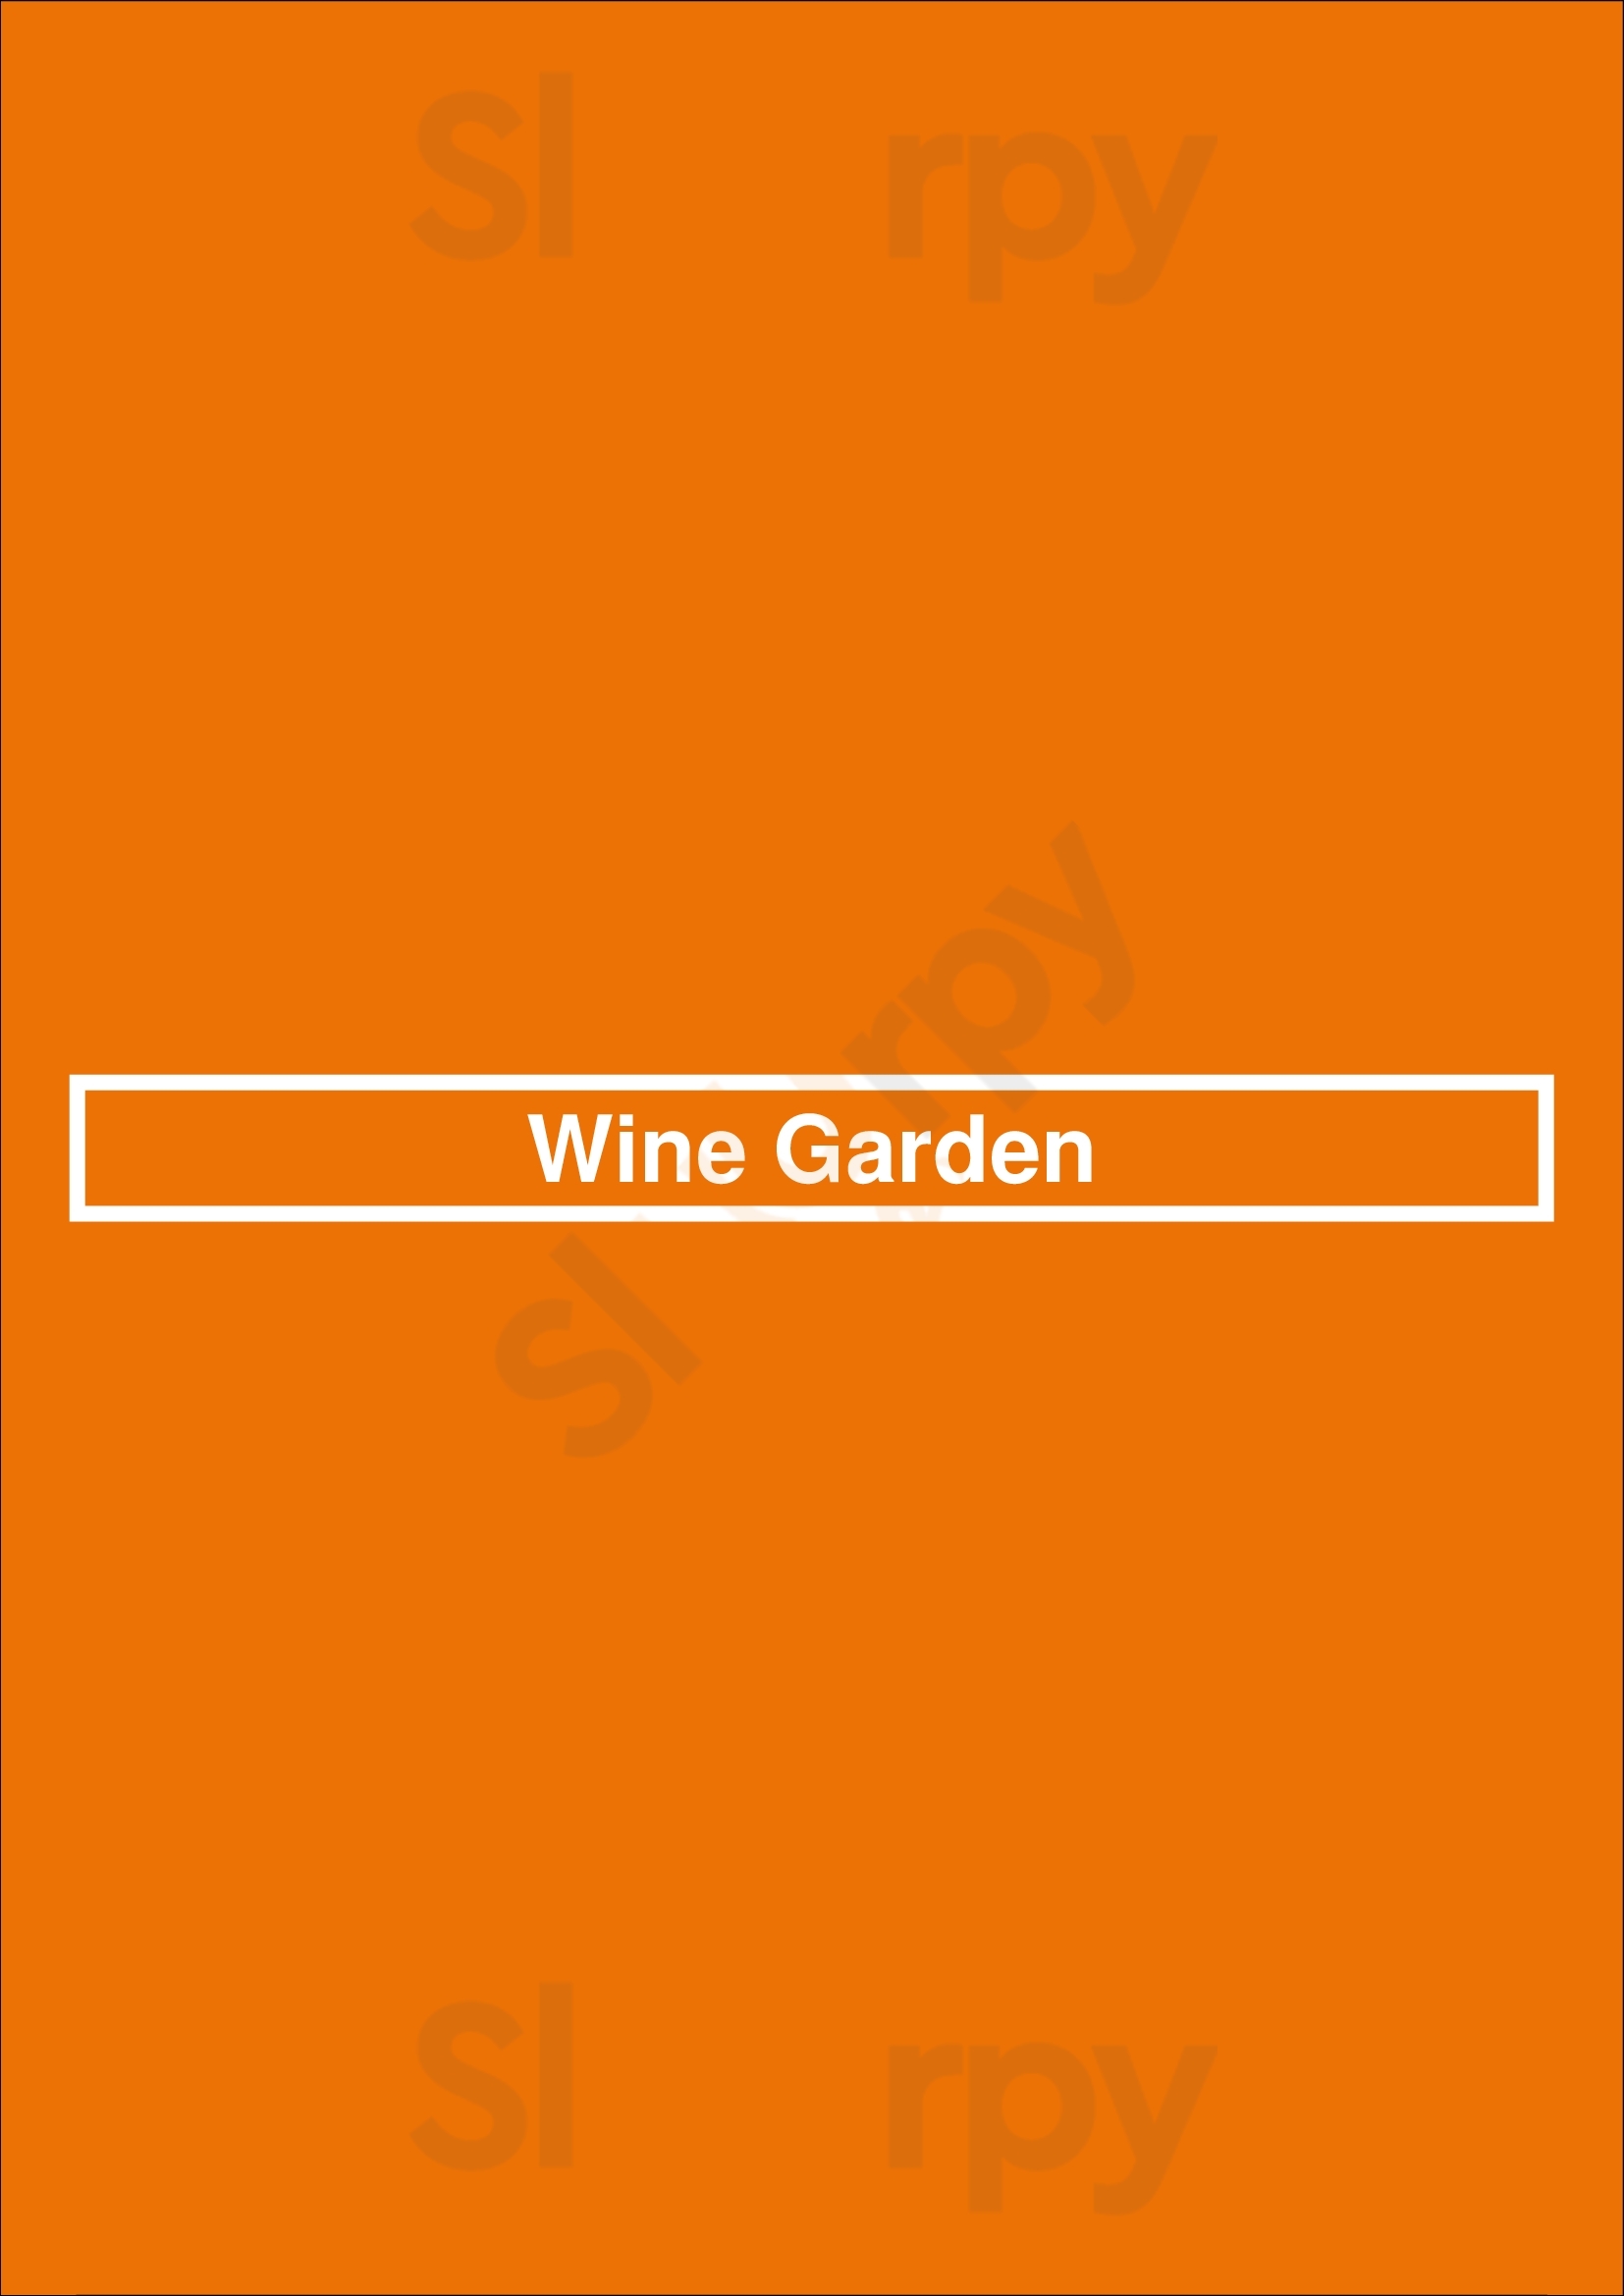 Wine + Garden Fort Lauderdale Menu - 1